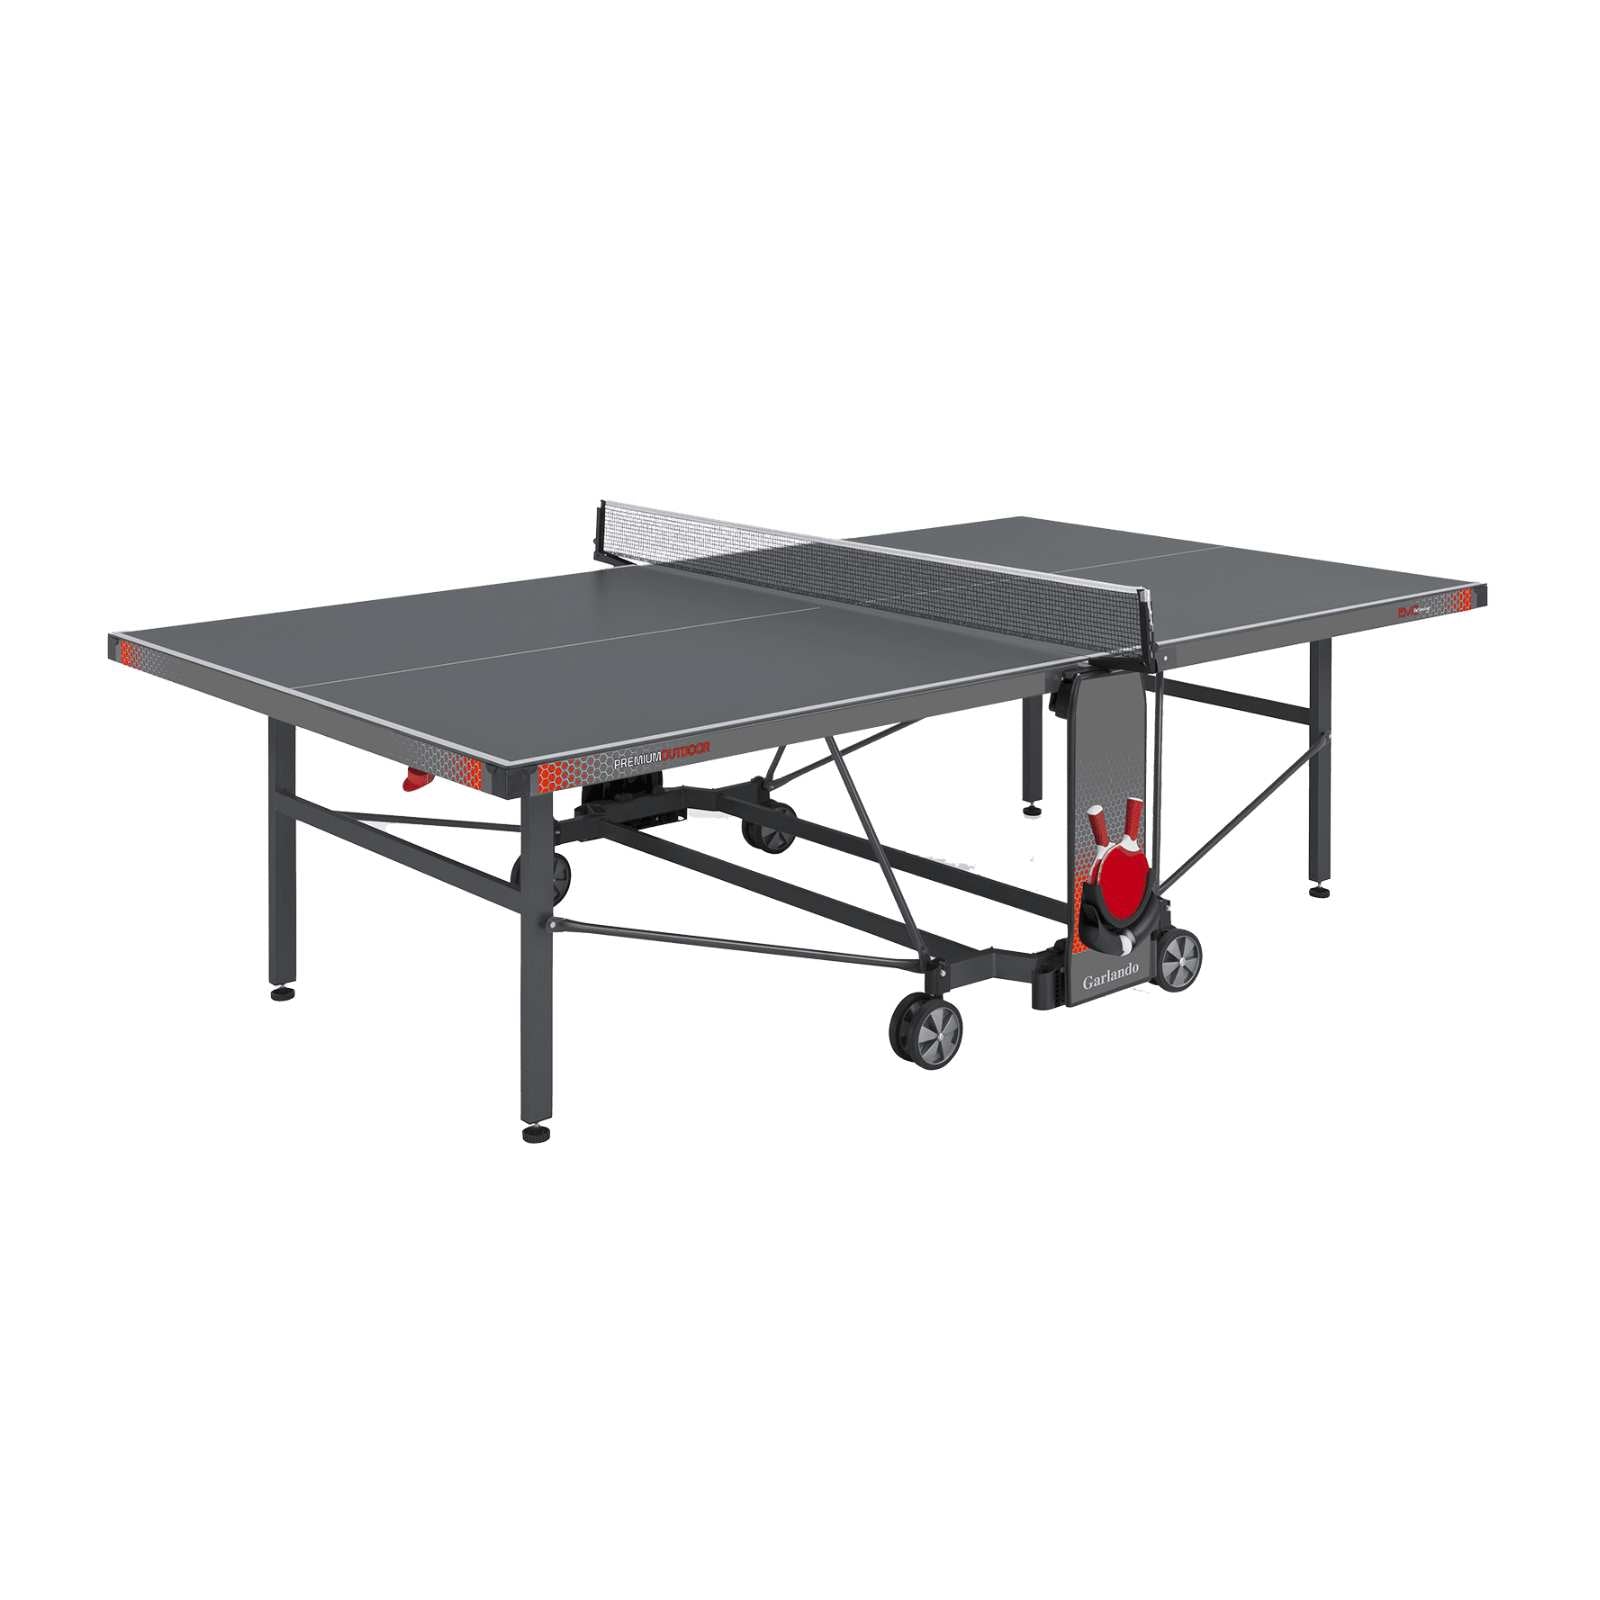 Premium Outdoor - Tavolo Ping Pong Pieghevole con Sistema Ergonomico ECS e sistema Antiriflesso